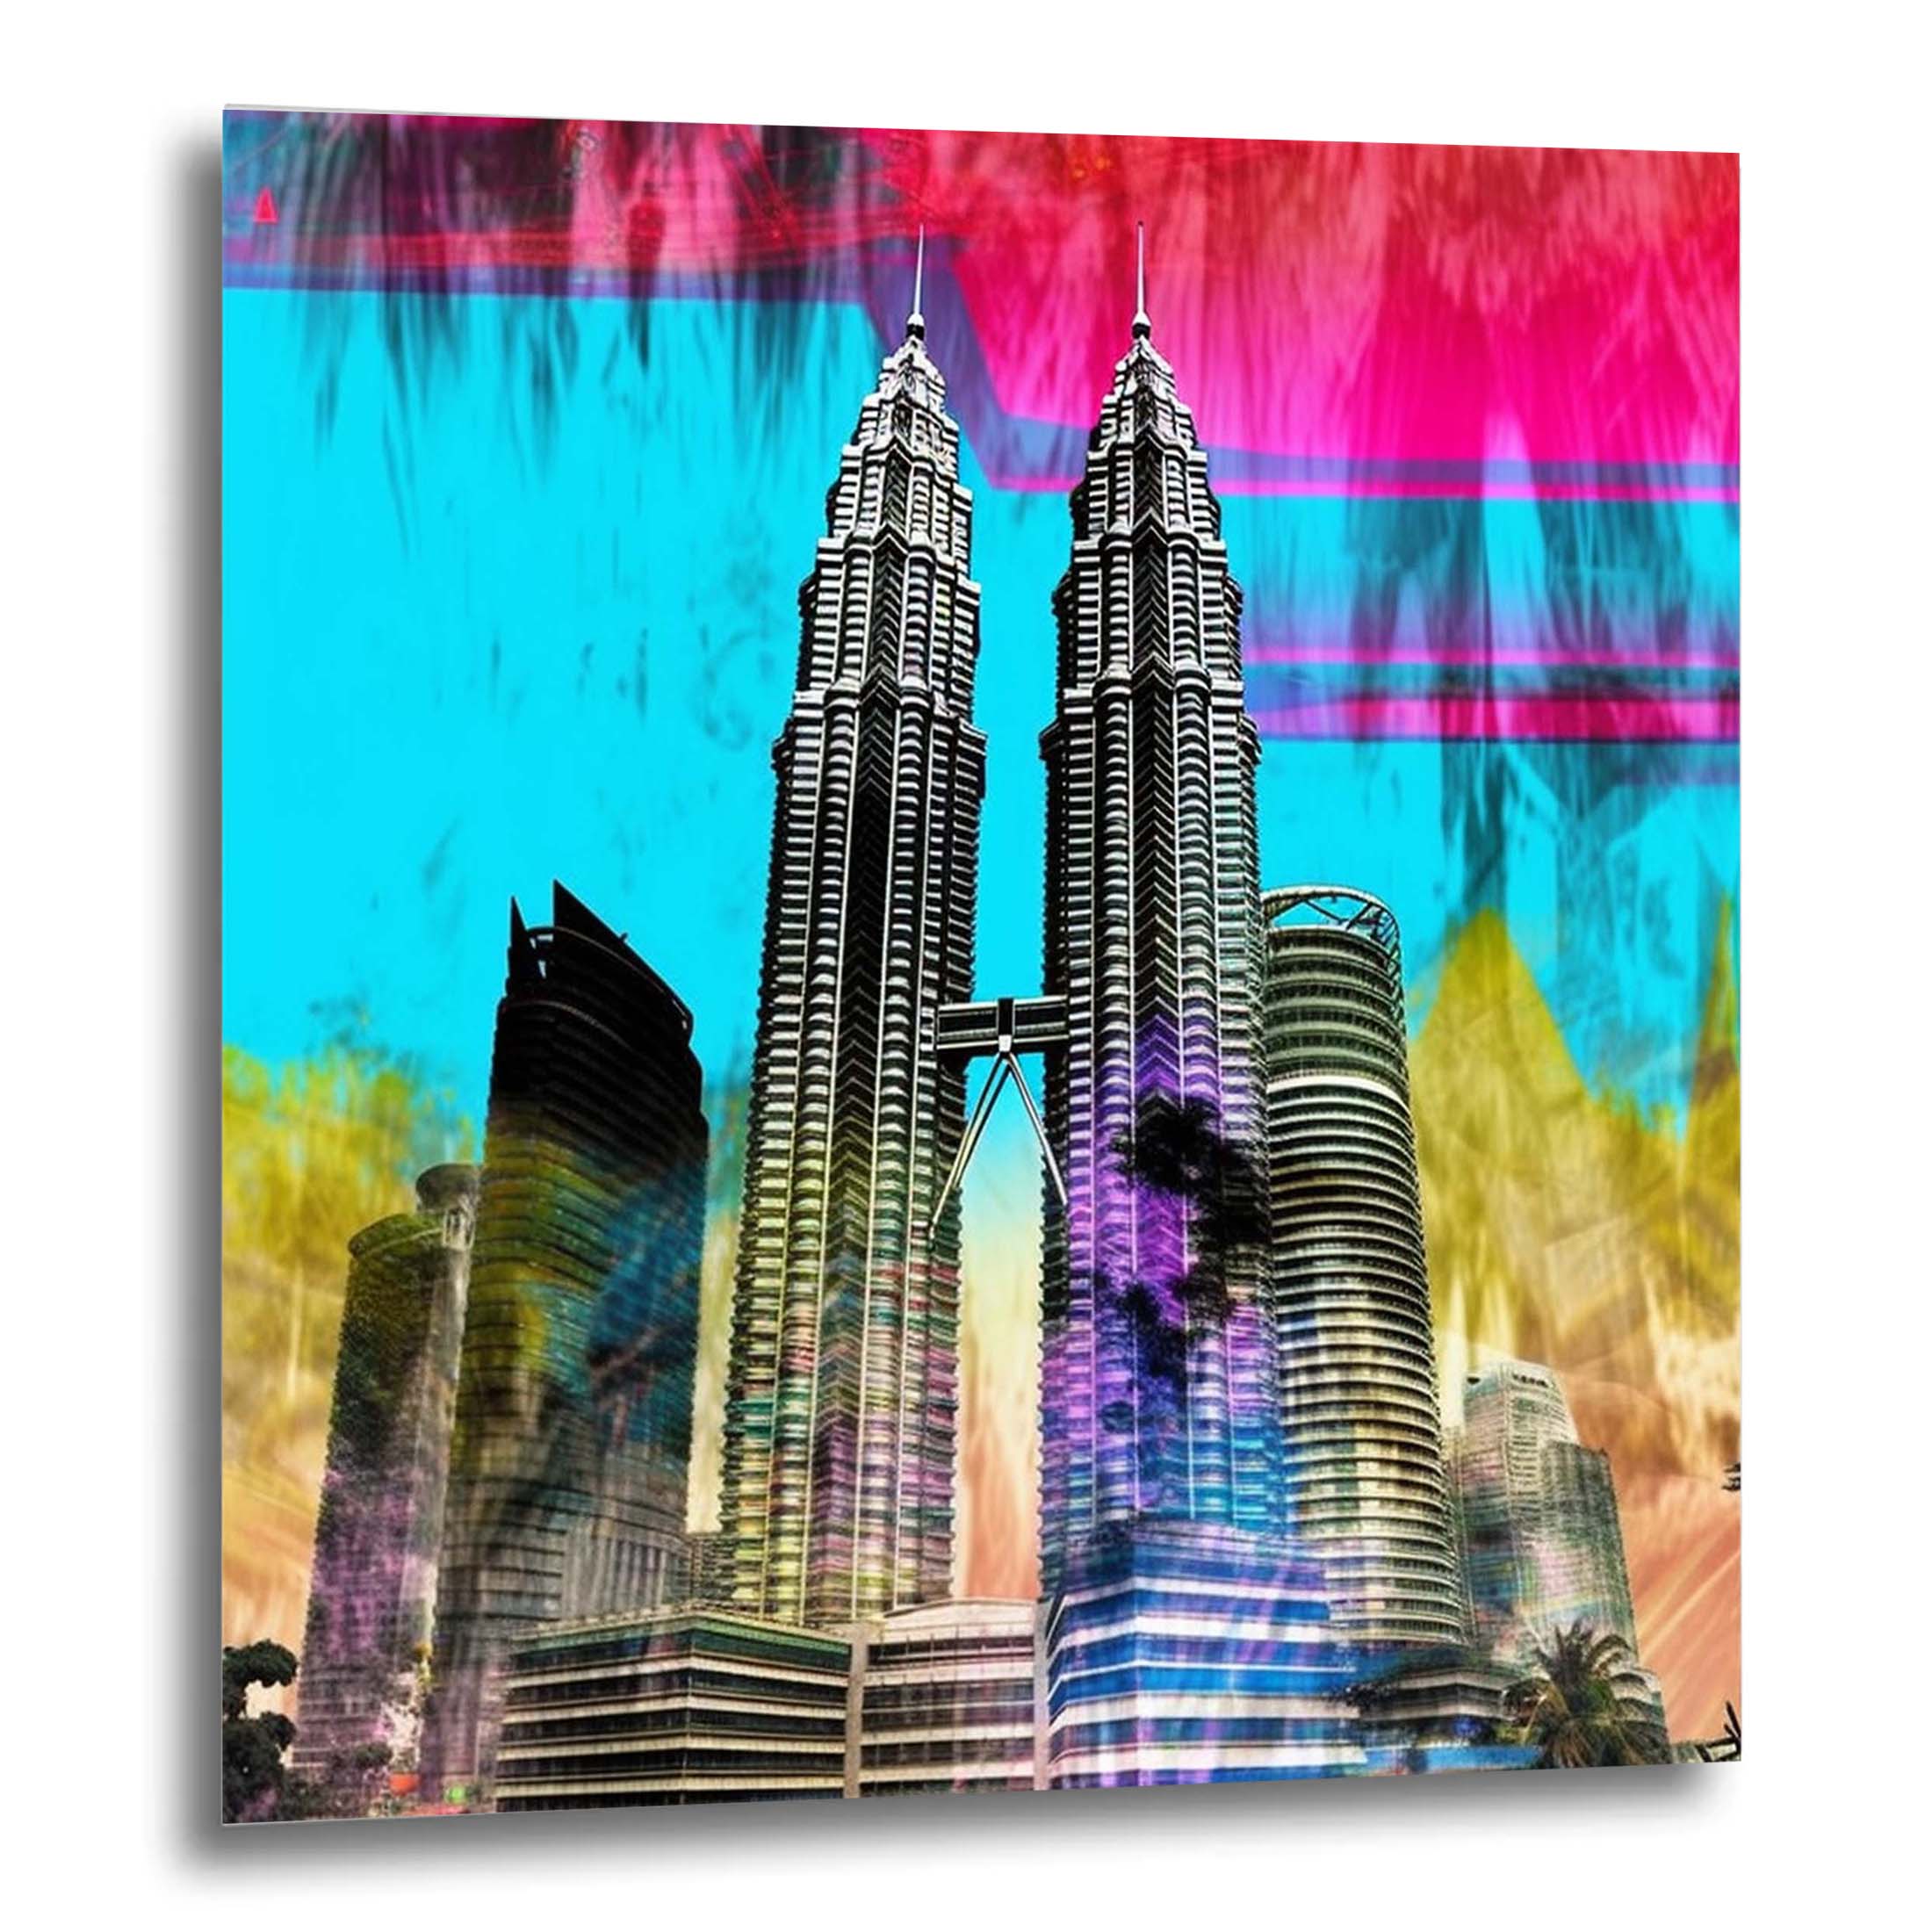 Petronas Towers Kuala - Lumpur – Urbanisto pop style mural Liebe urbanisto - - art Welt. in Deine